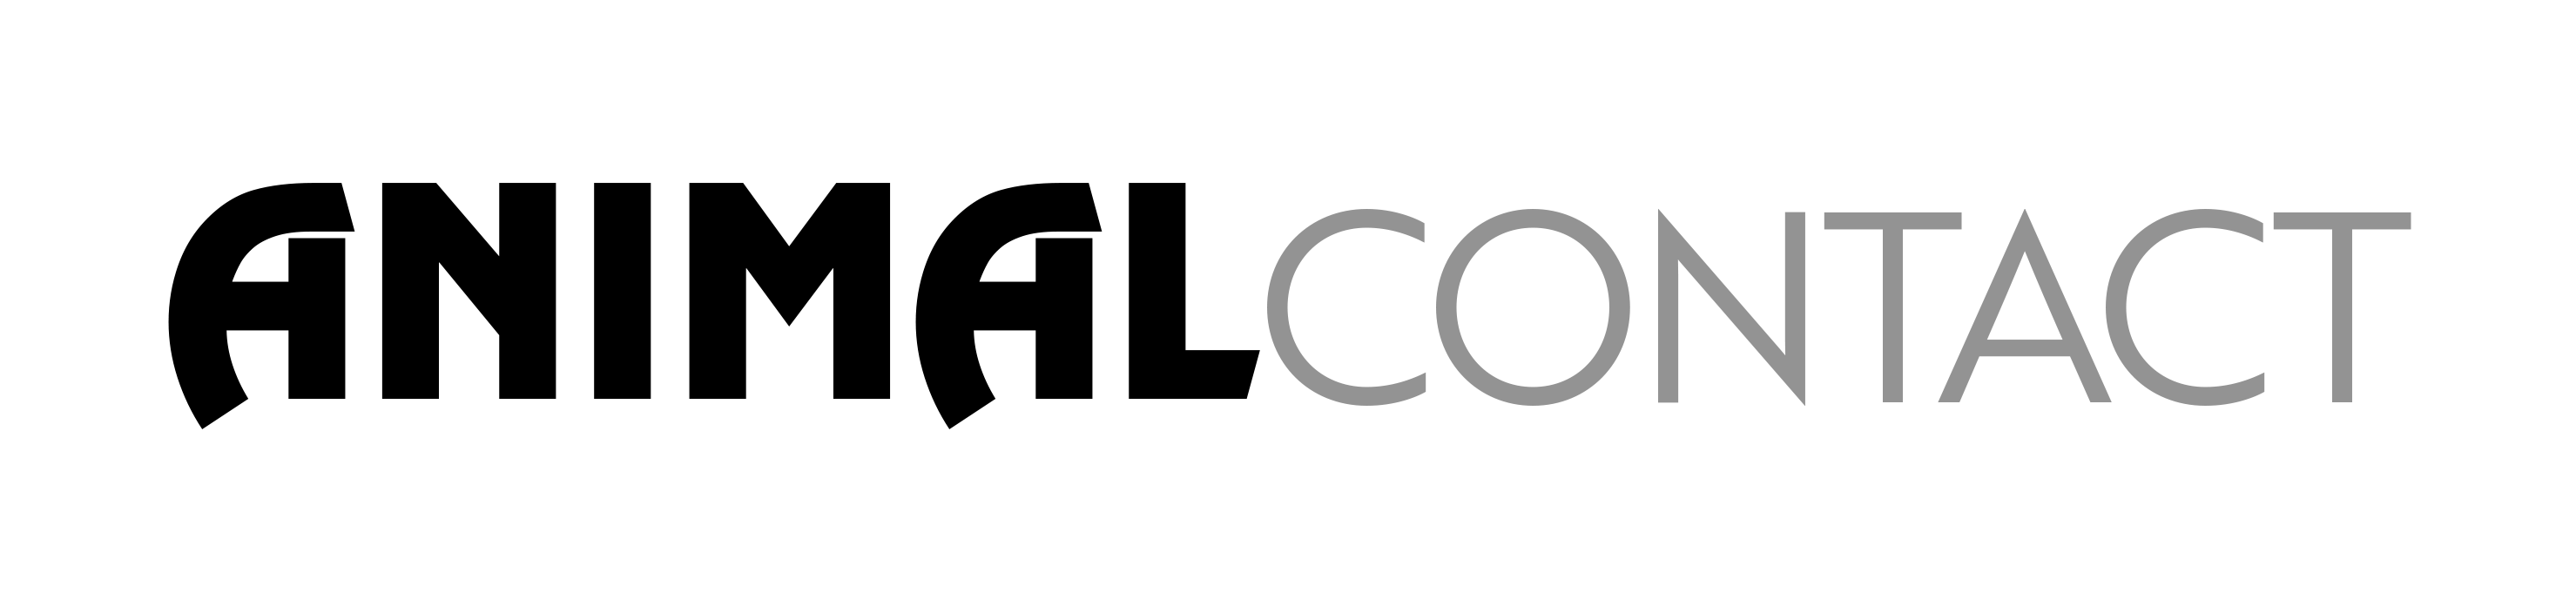 Animal contact - logo